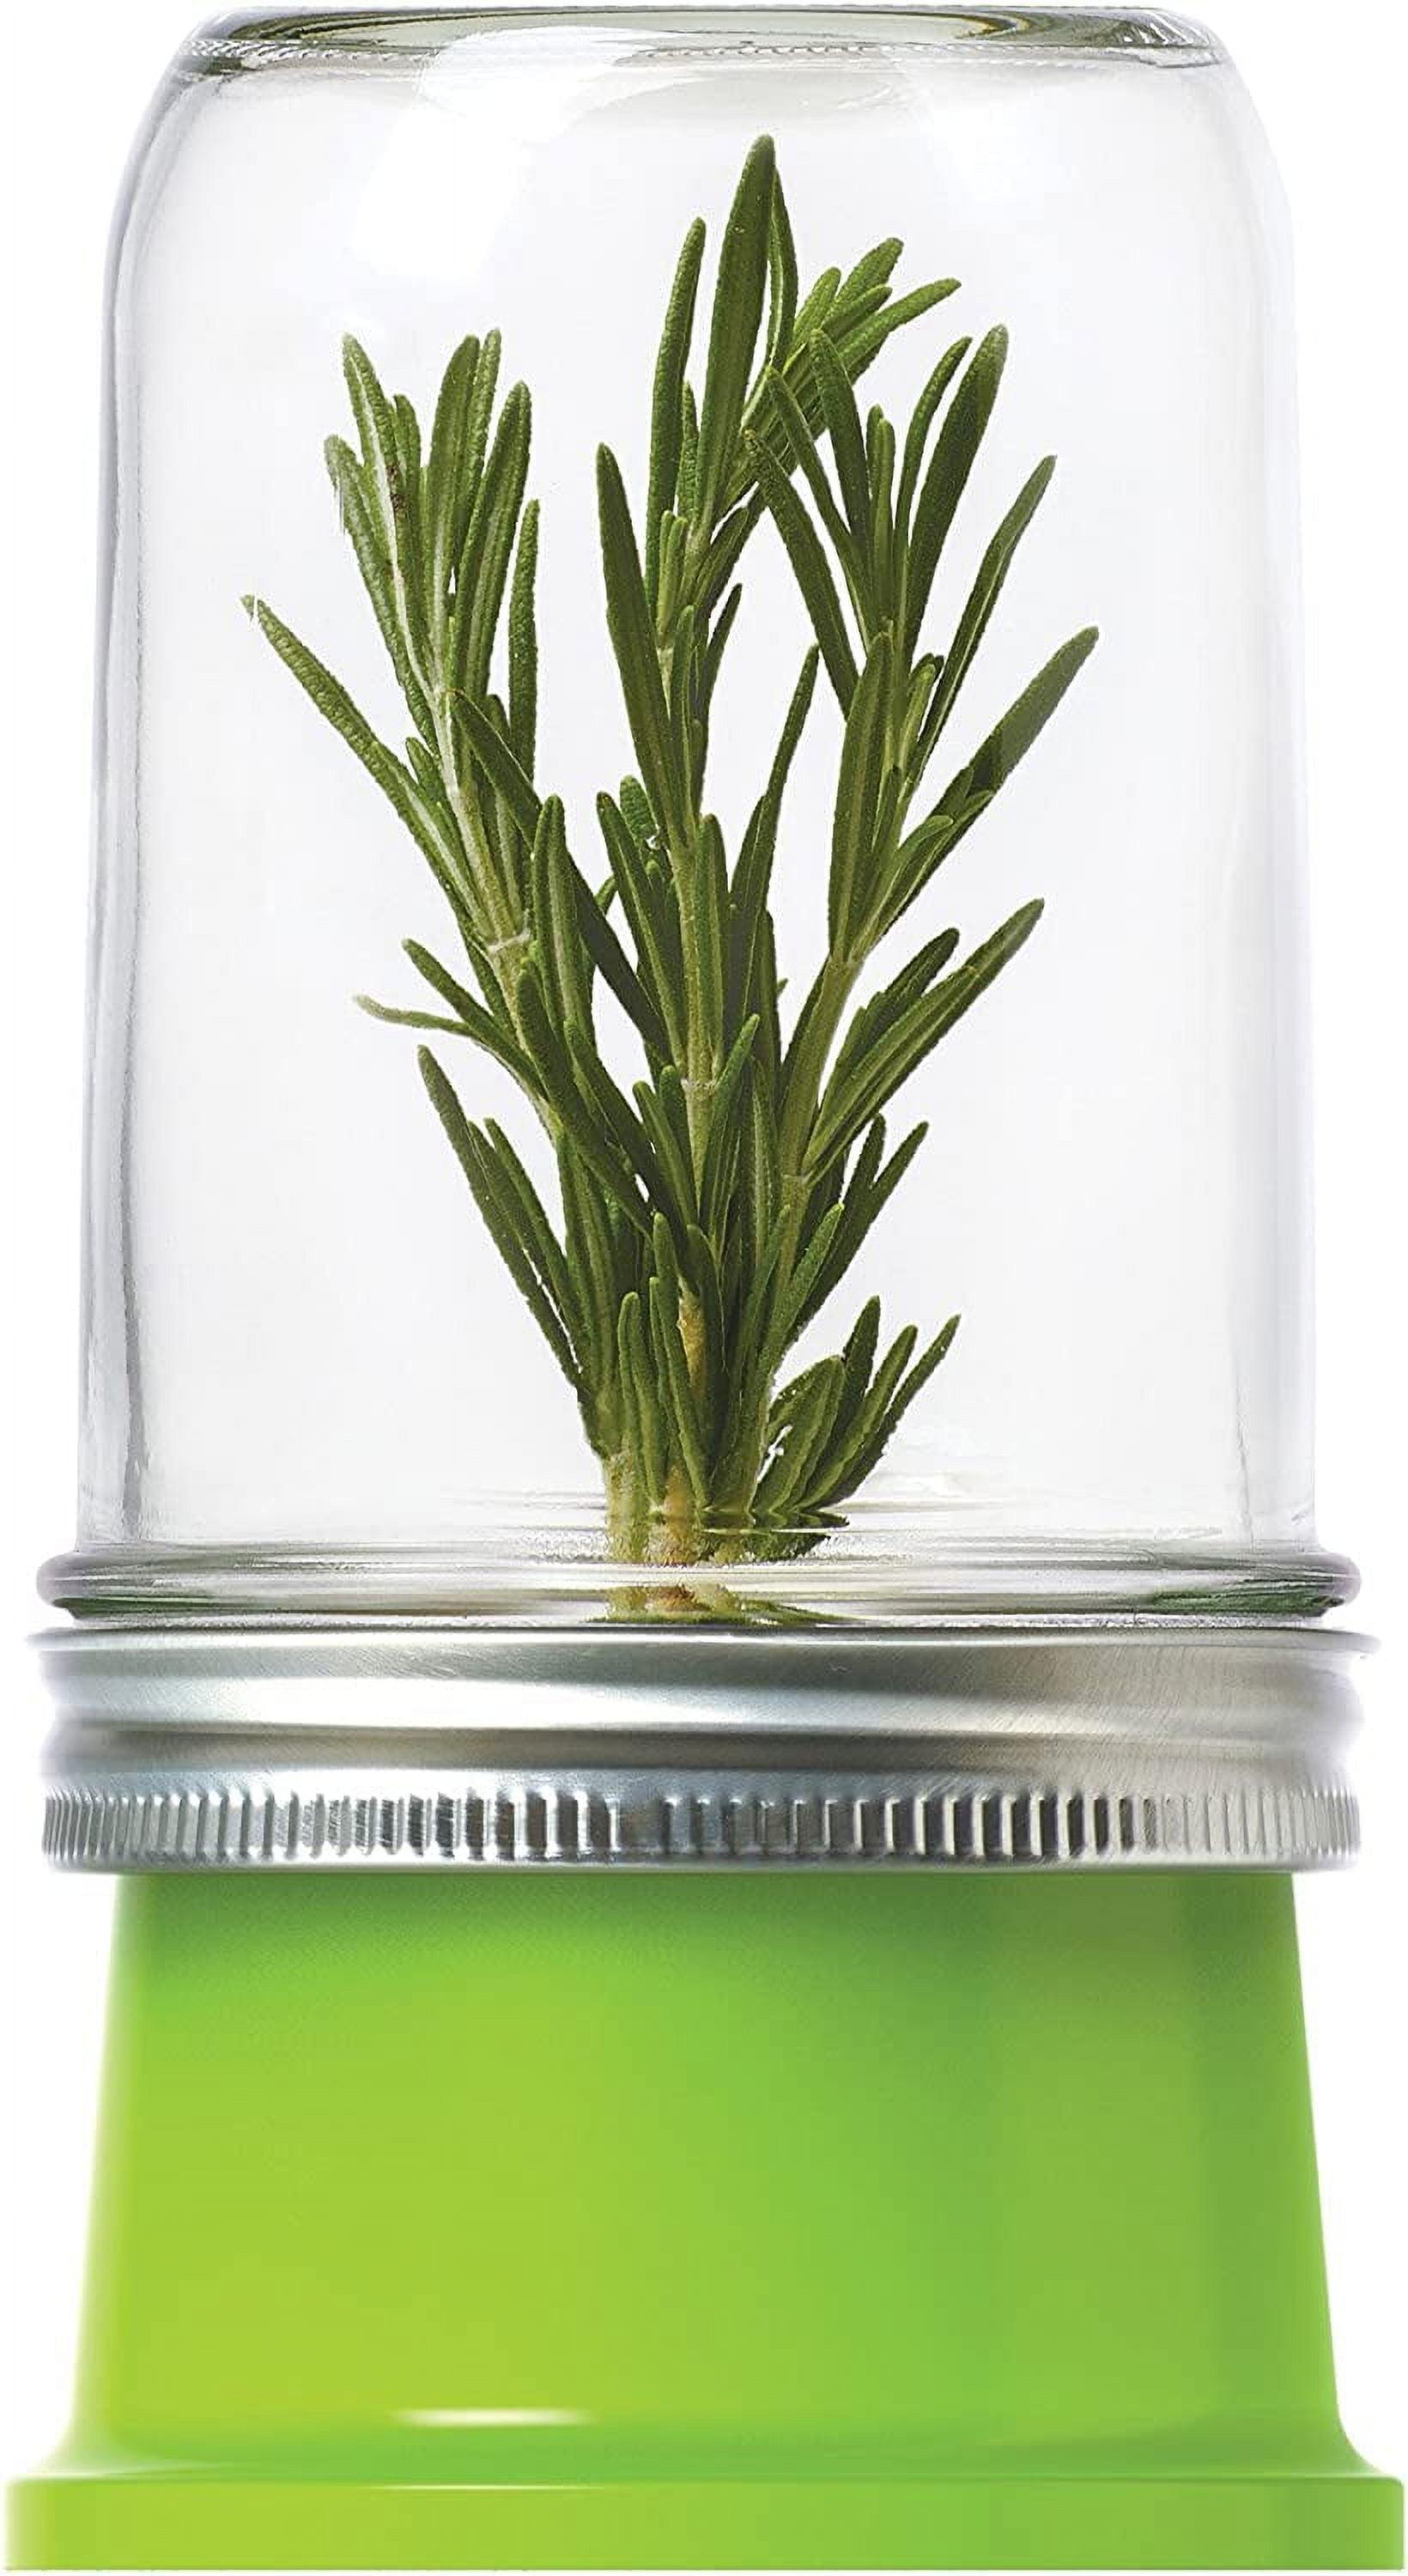 Green BPA-Free Plastic Herb Saver Lid for Wide Mouth Mason Jars